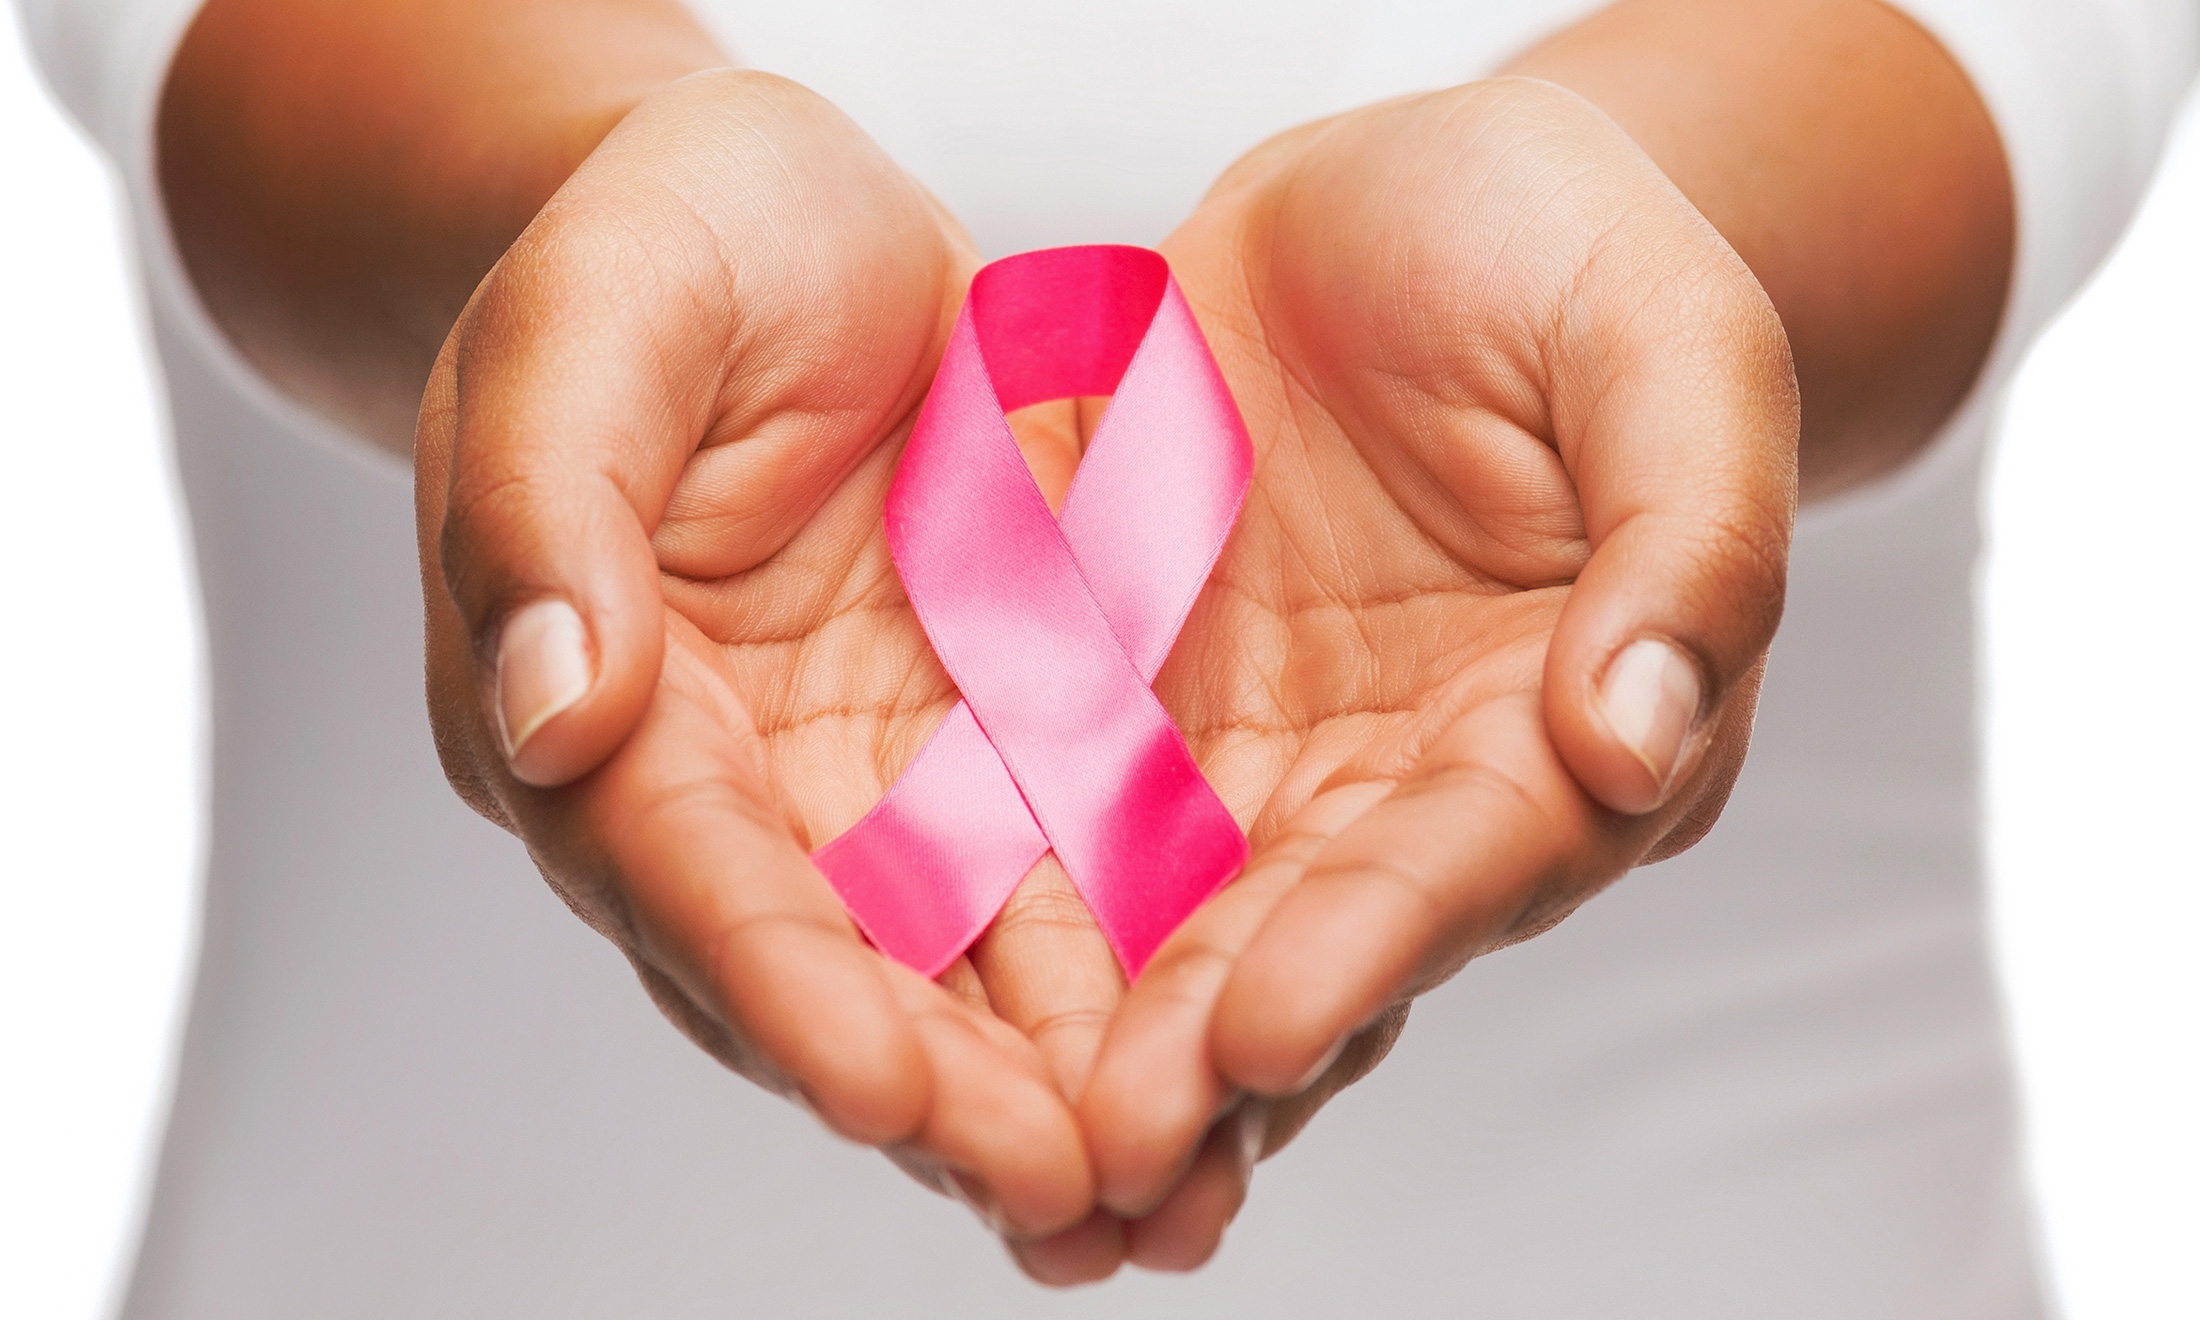 Nigeria: Kemisola Bolarinwa wants to improve breast cancer diagnosis with  Smart Bra - We are Tech